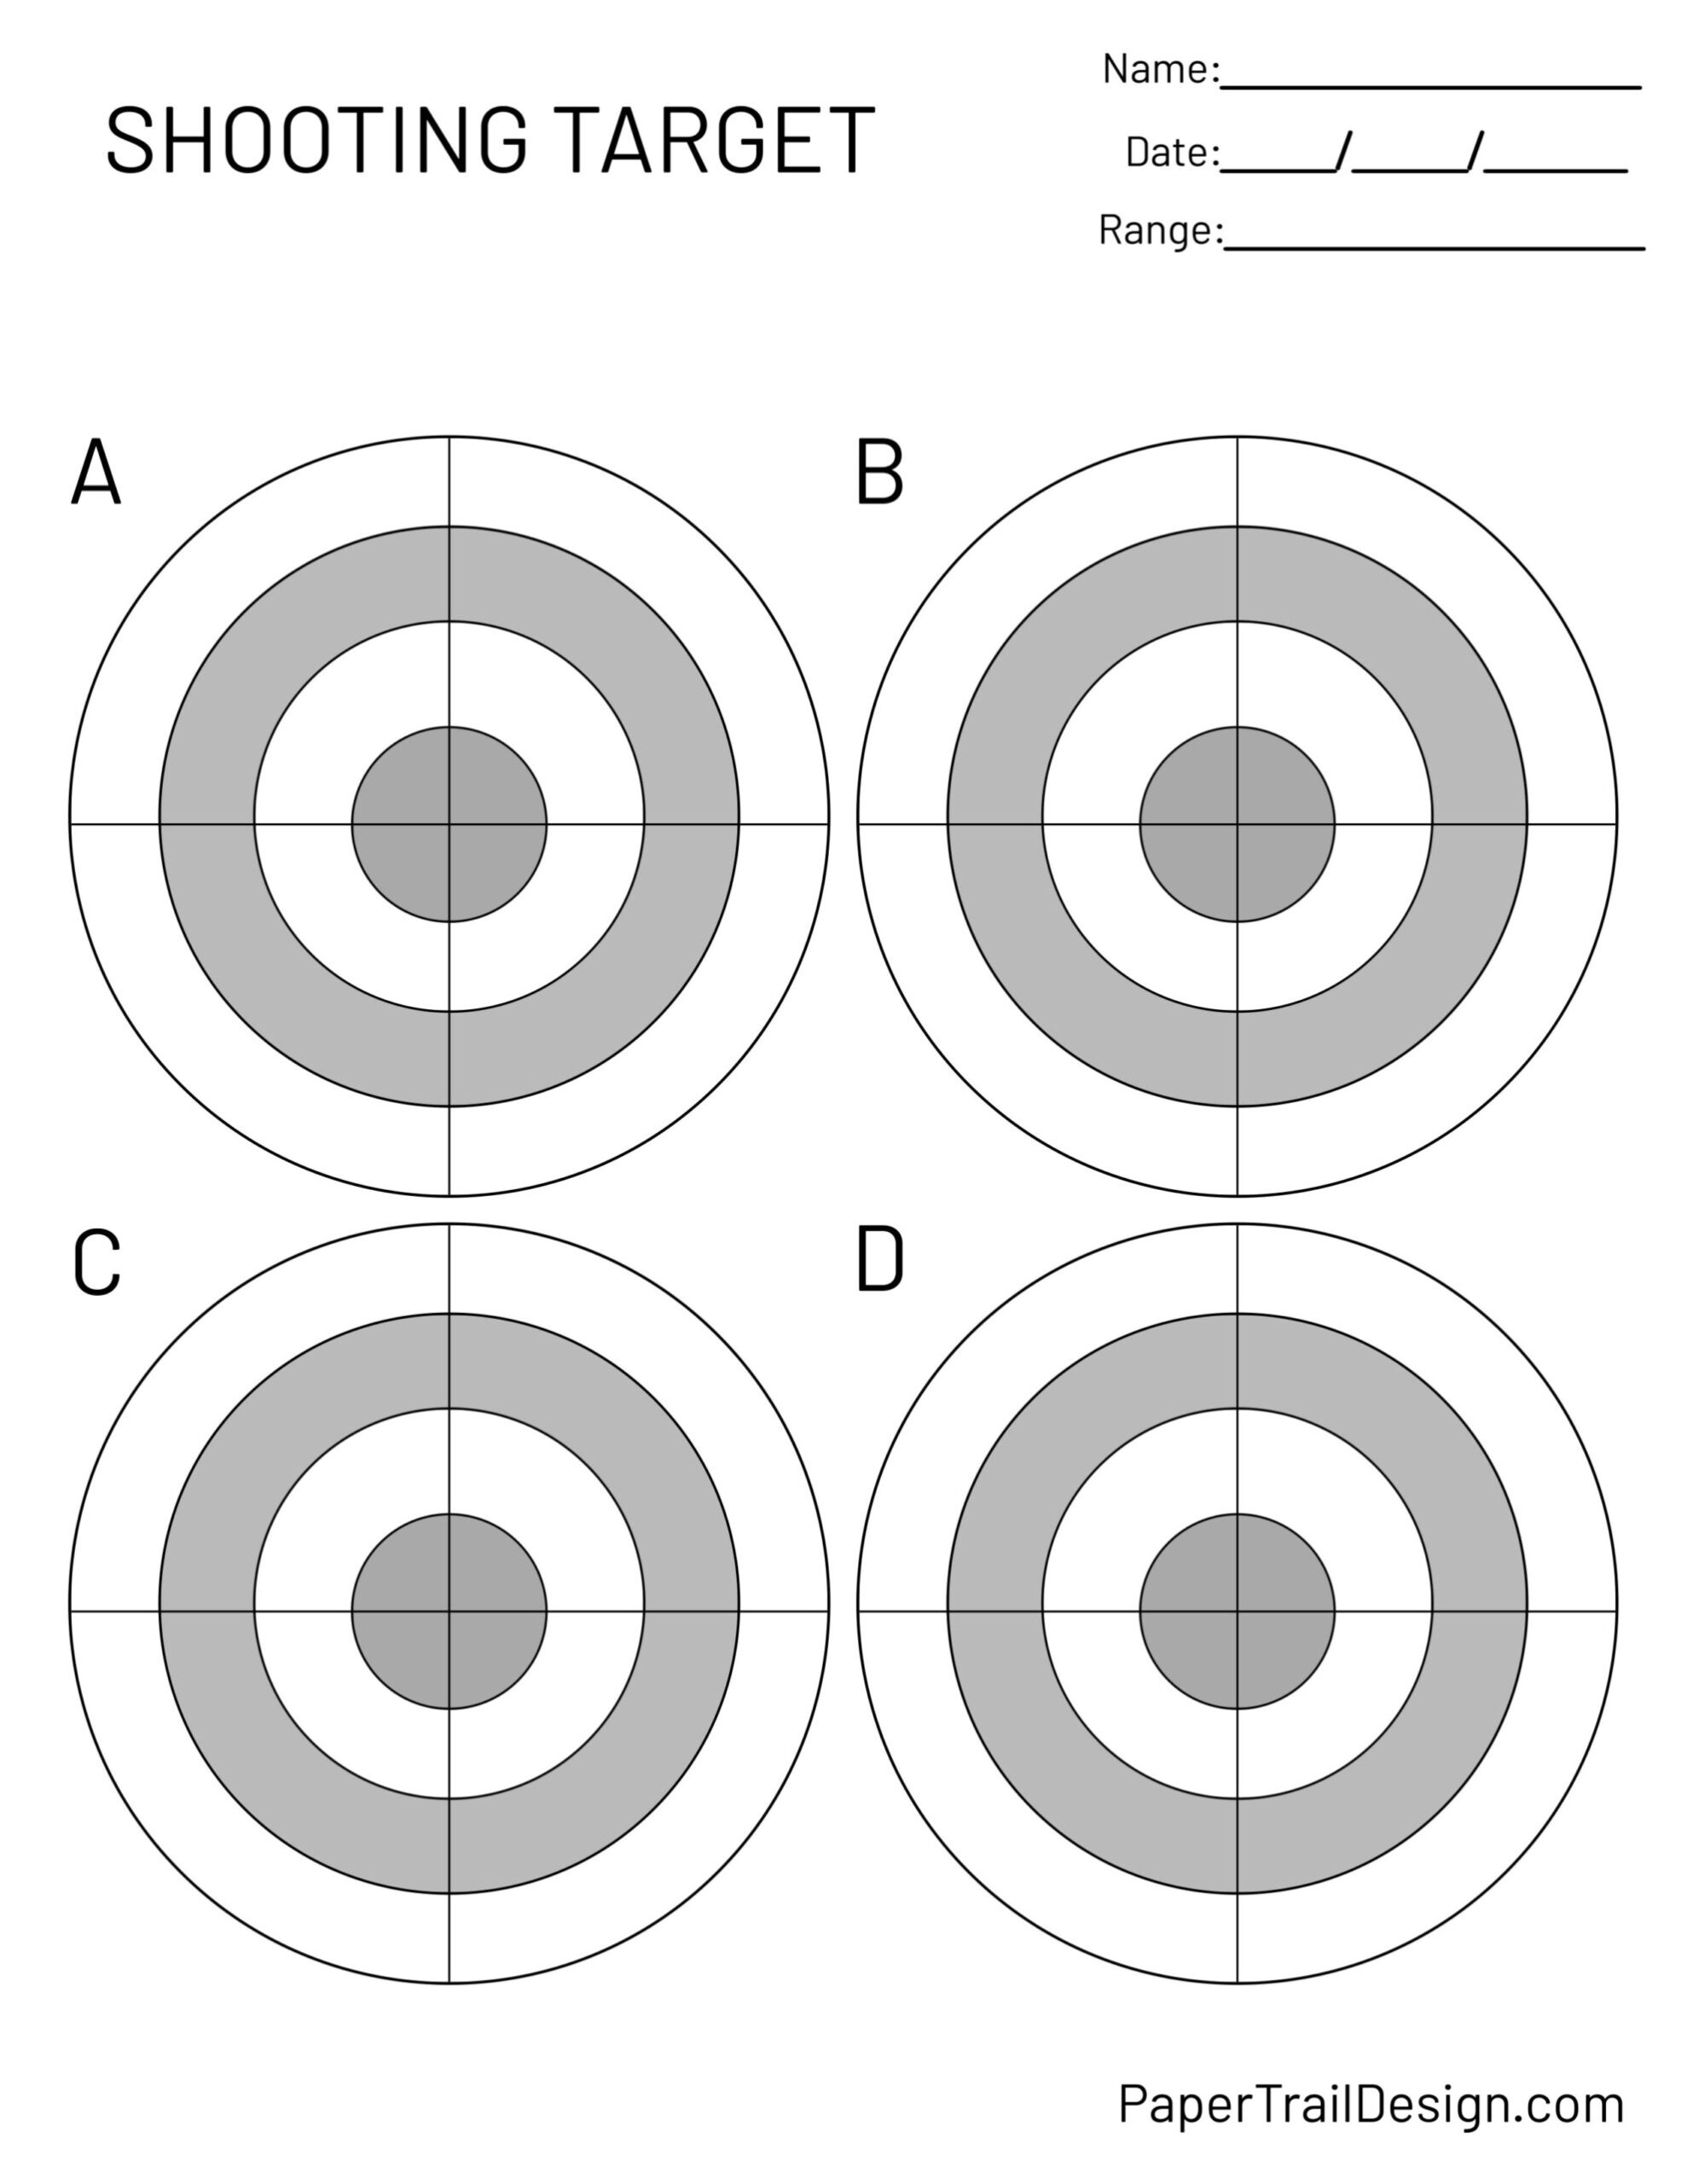 Free Printable Shooting Targets - Paper Trail Design - Best Free Printable Targets